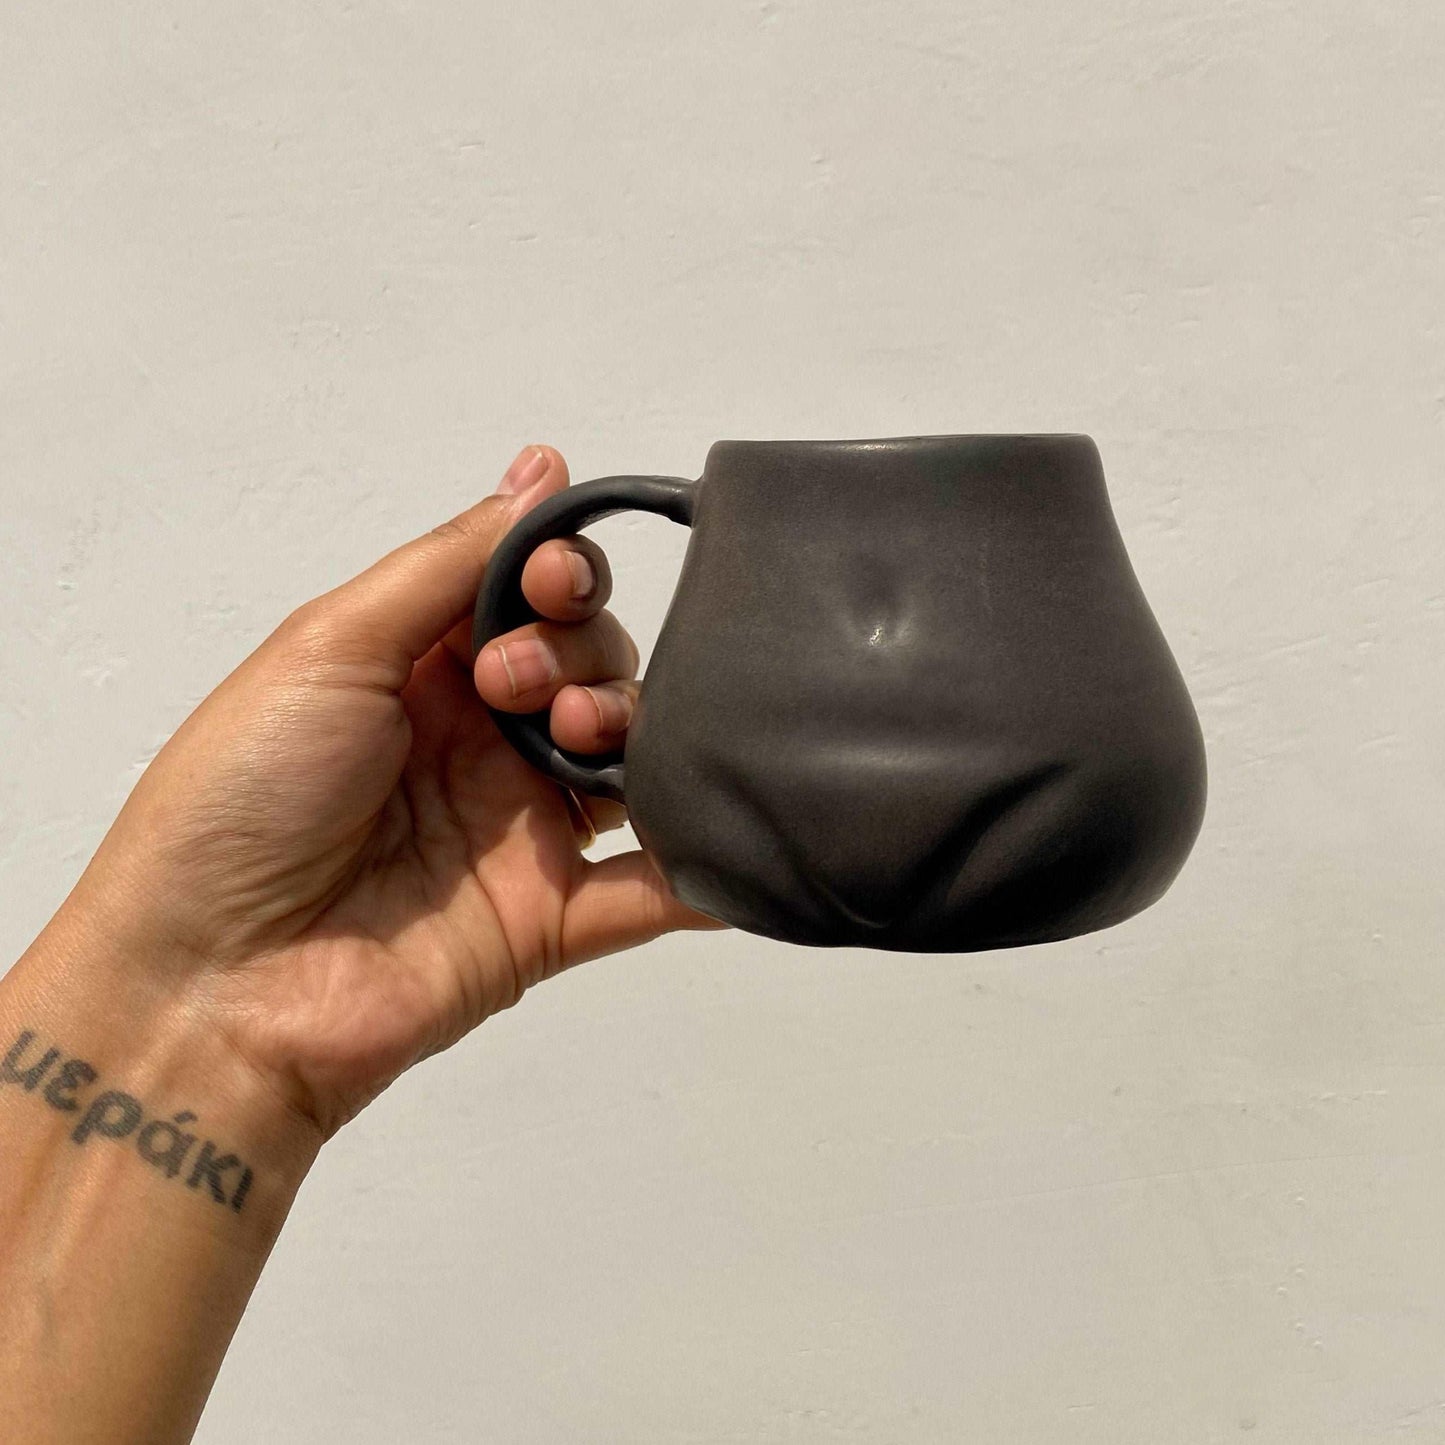 Matte Black Ceramic Butt Sculpture Mug for Coffee ,Tea and Milk